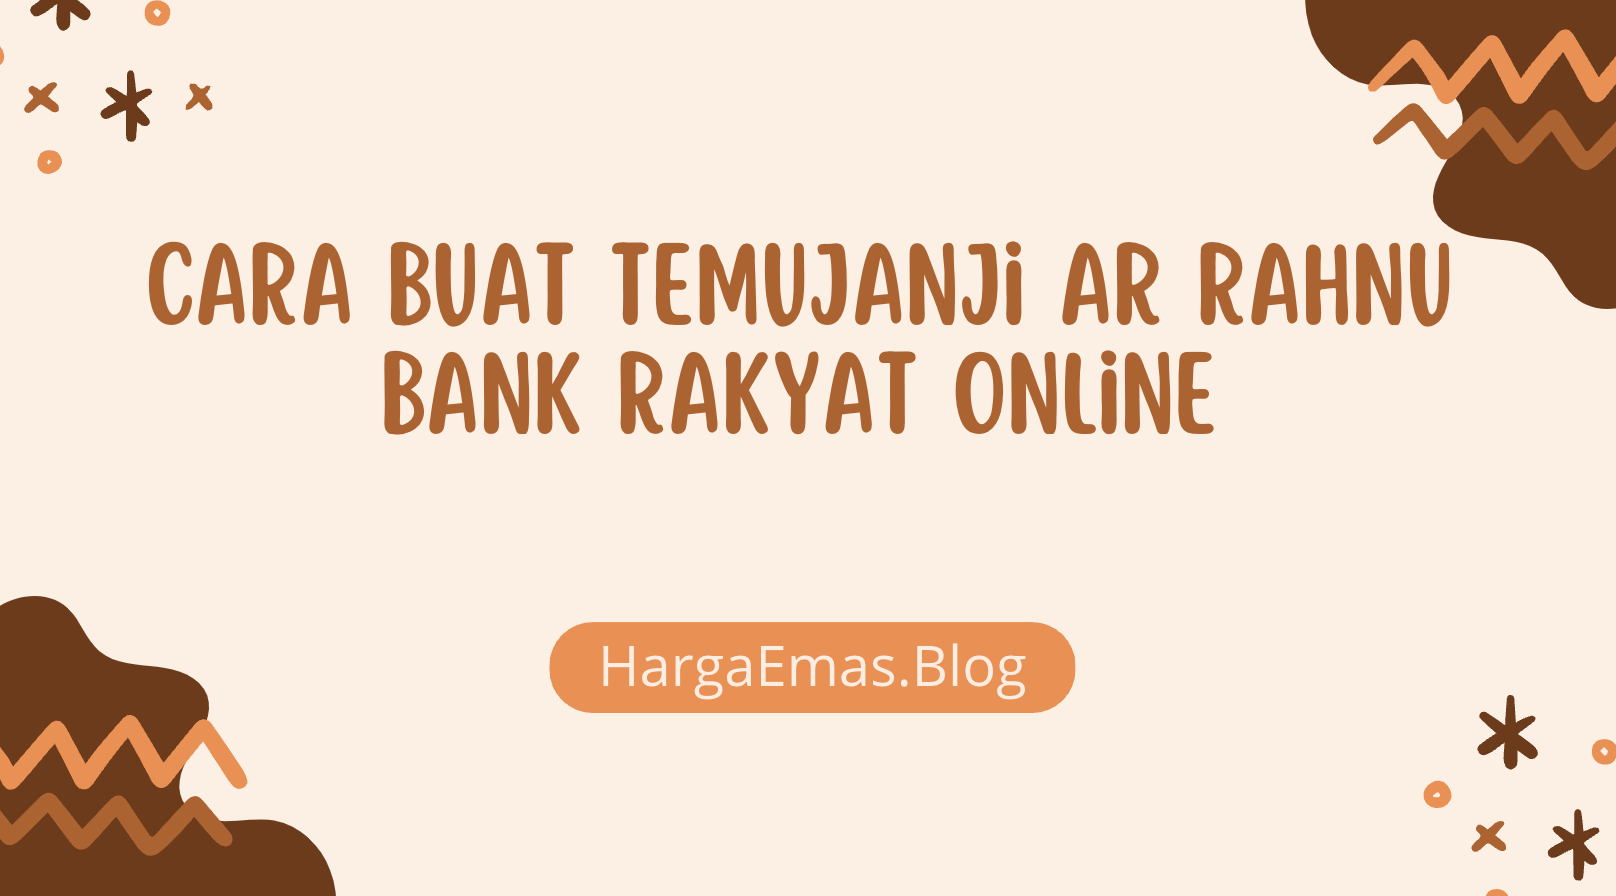 Cara Buat Temujanji Ar Rahnu Bank Rakyat Online